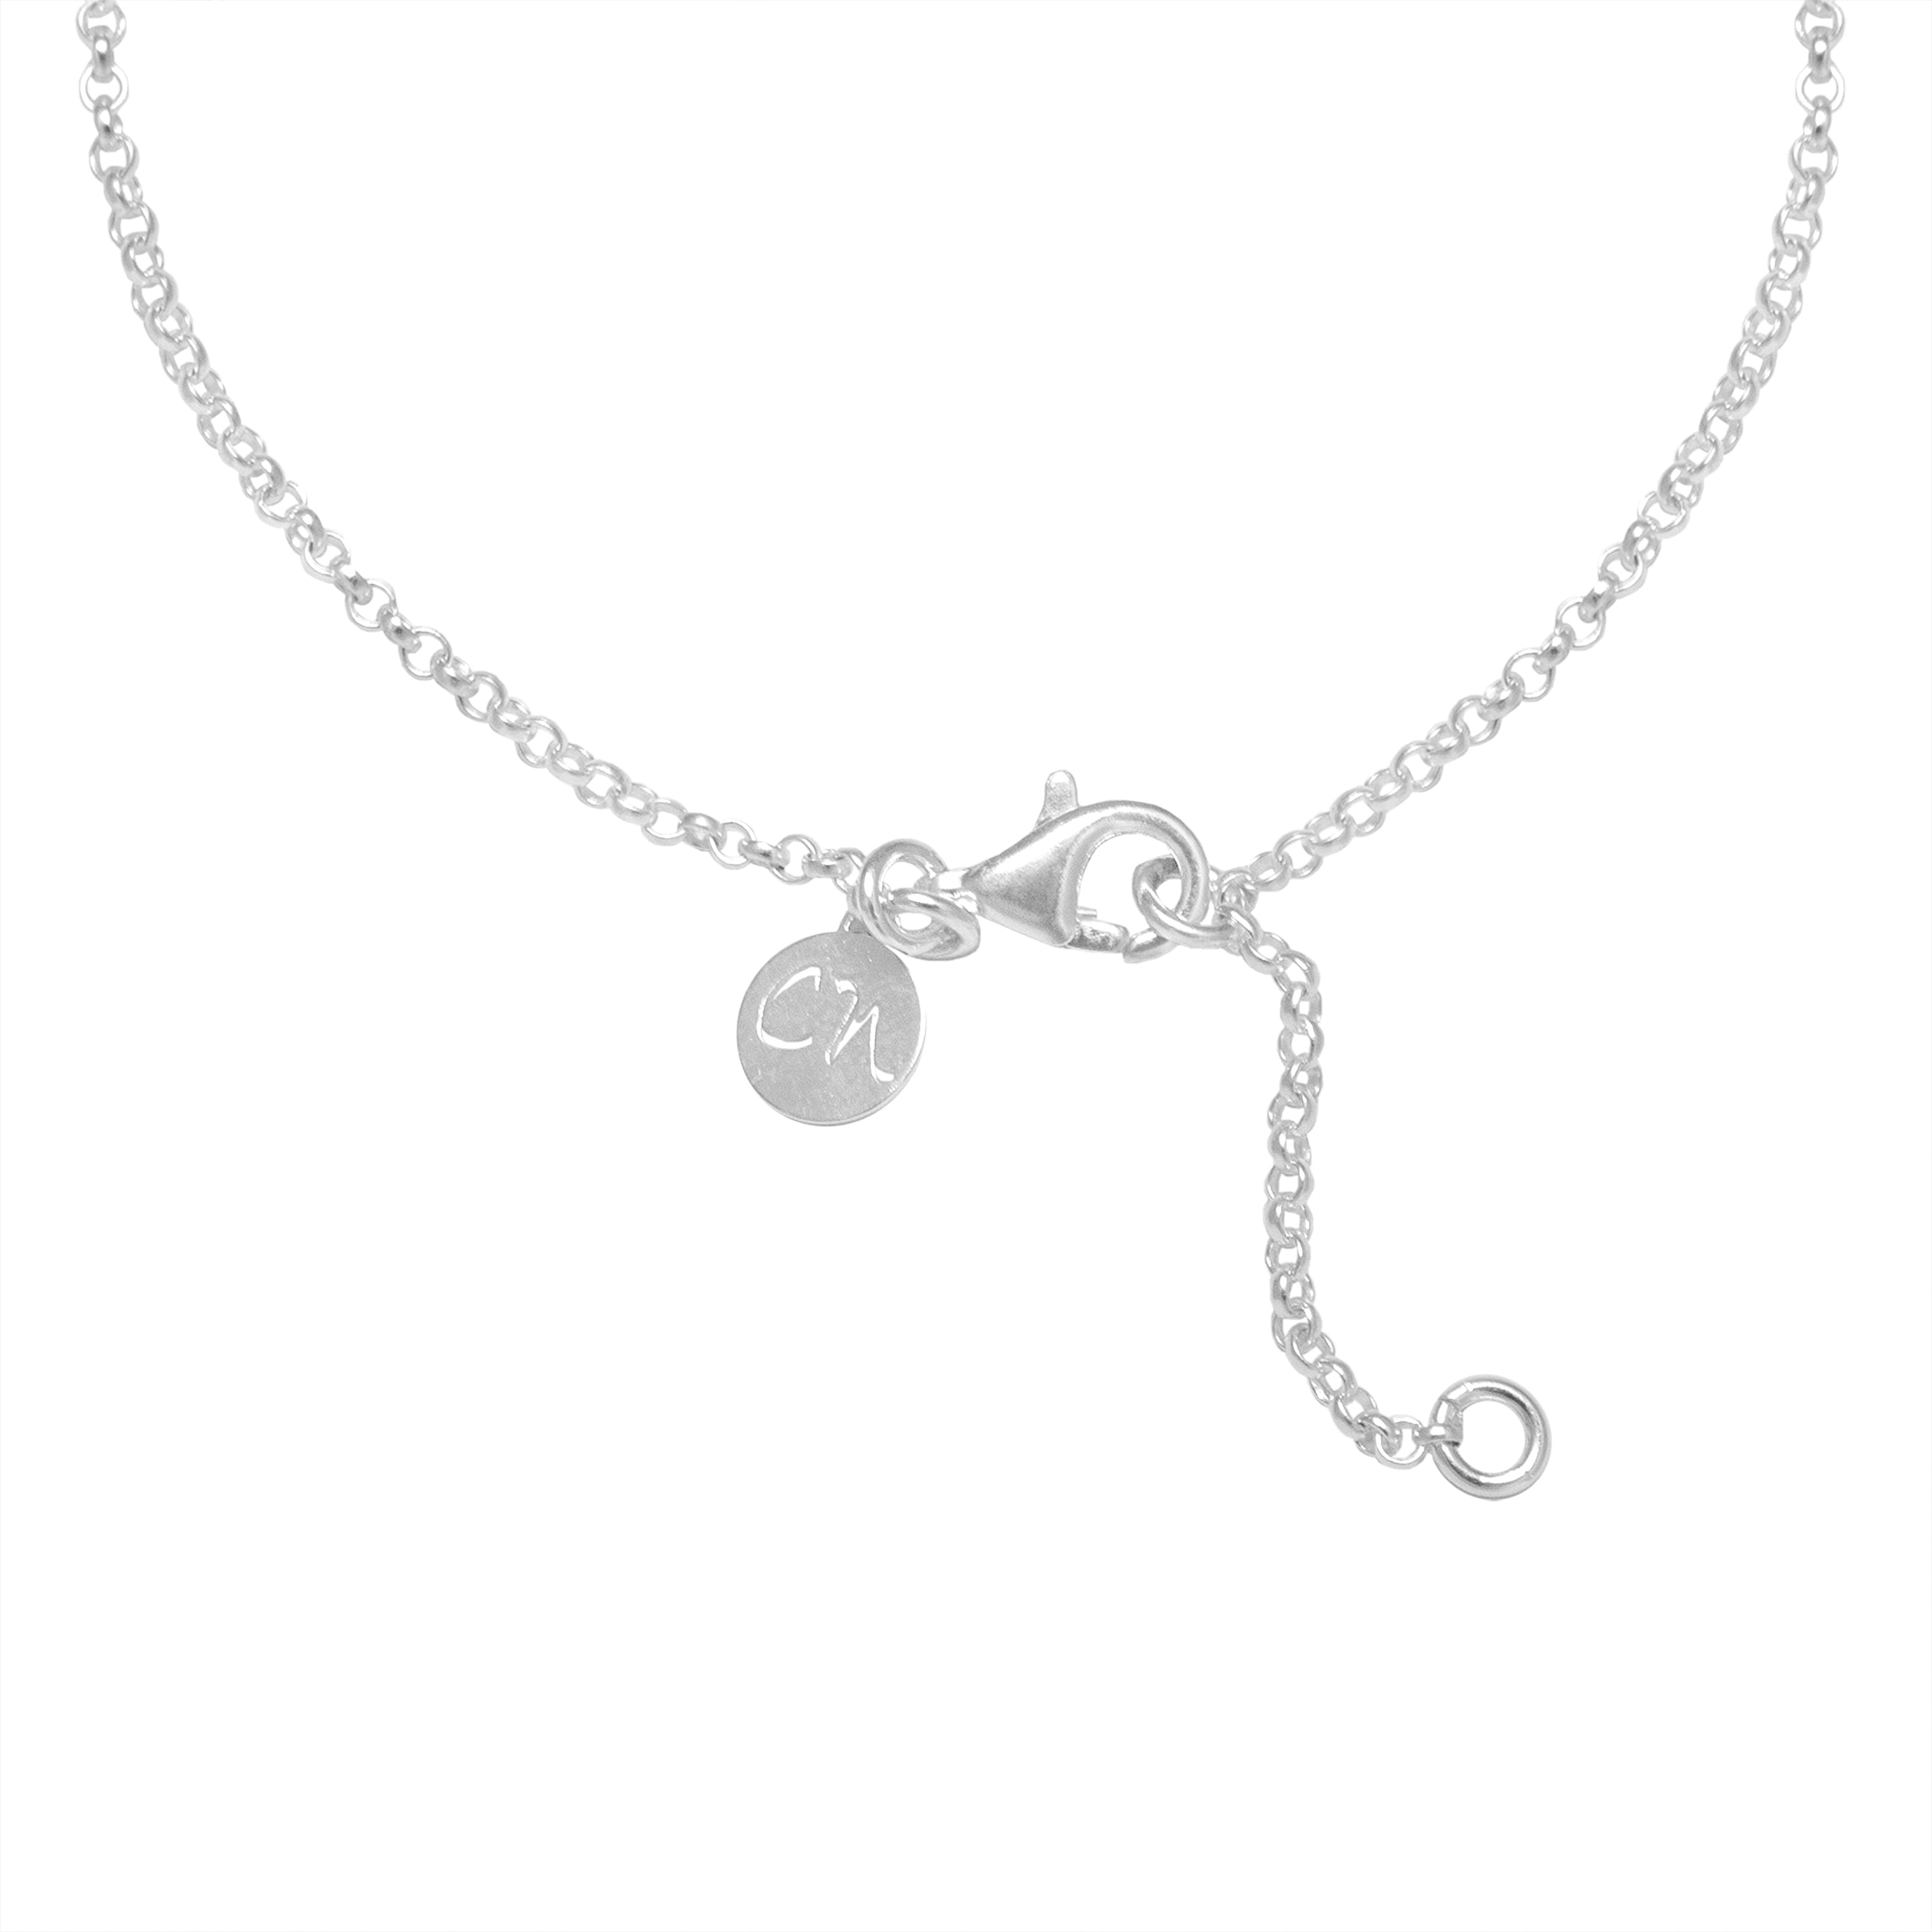 Claudia Navarro Jewelry- Bracelet Hueso / Silver